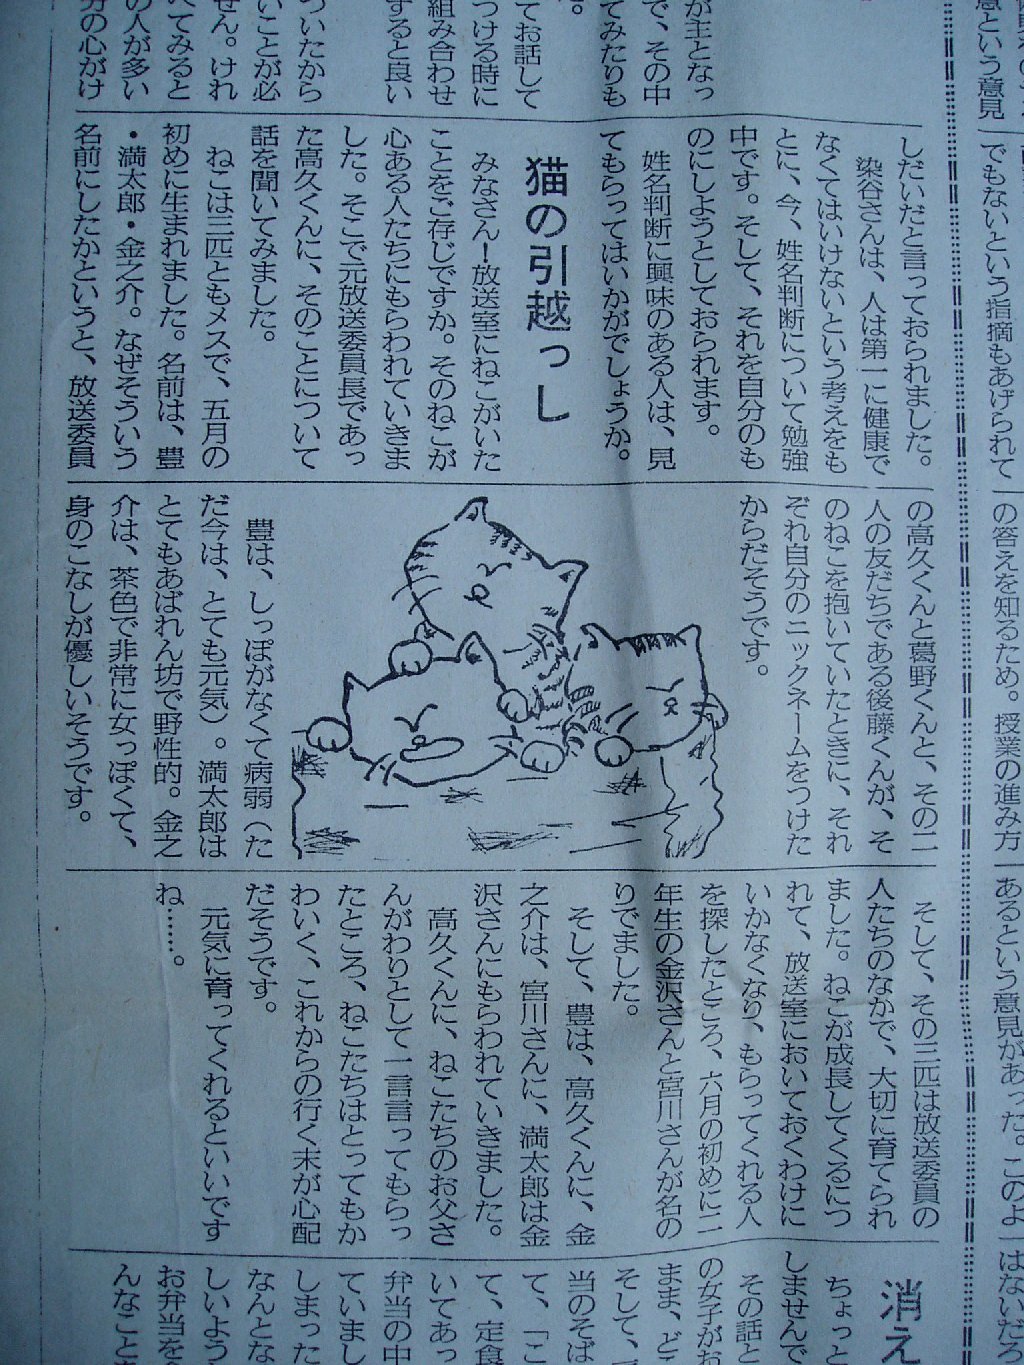 KOSHIKO_NEWS_CAT.JPG - 372,751BYTES